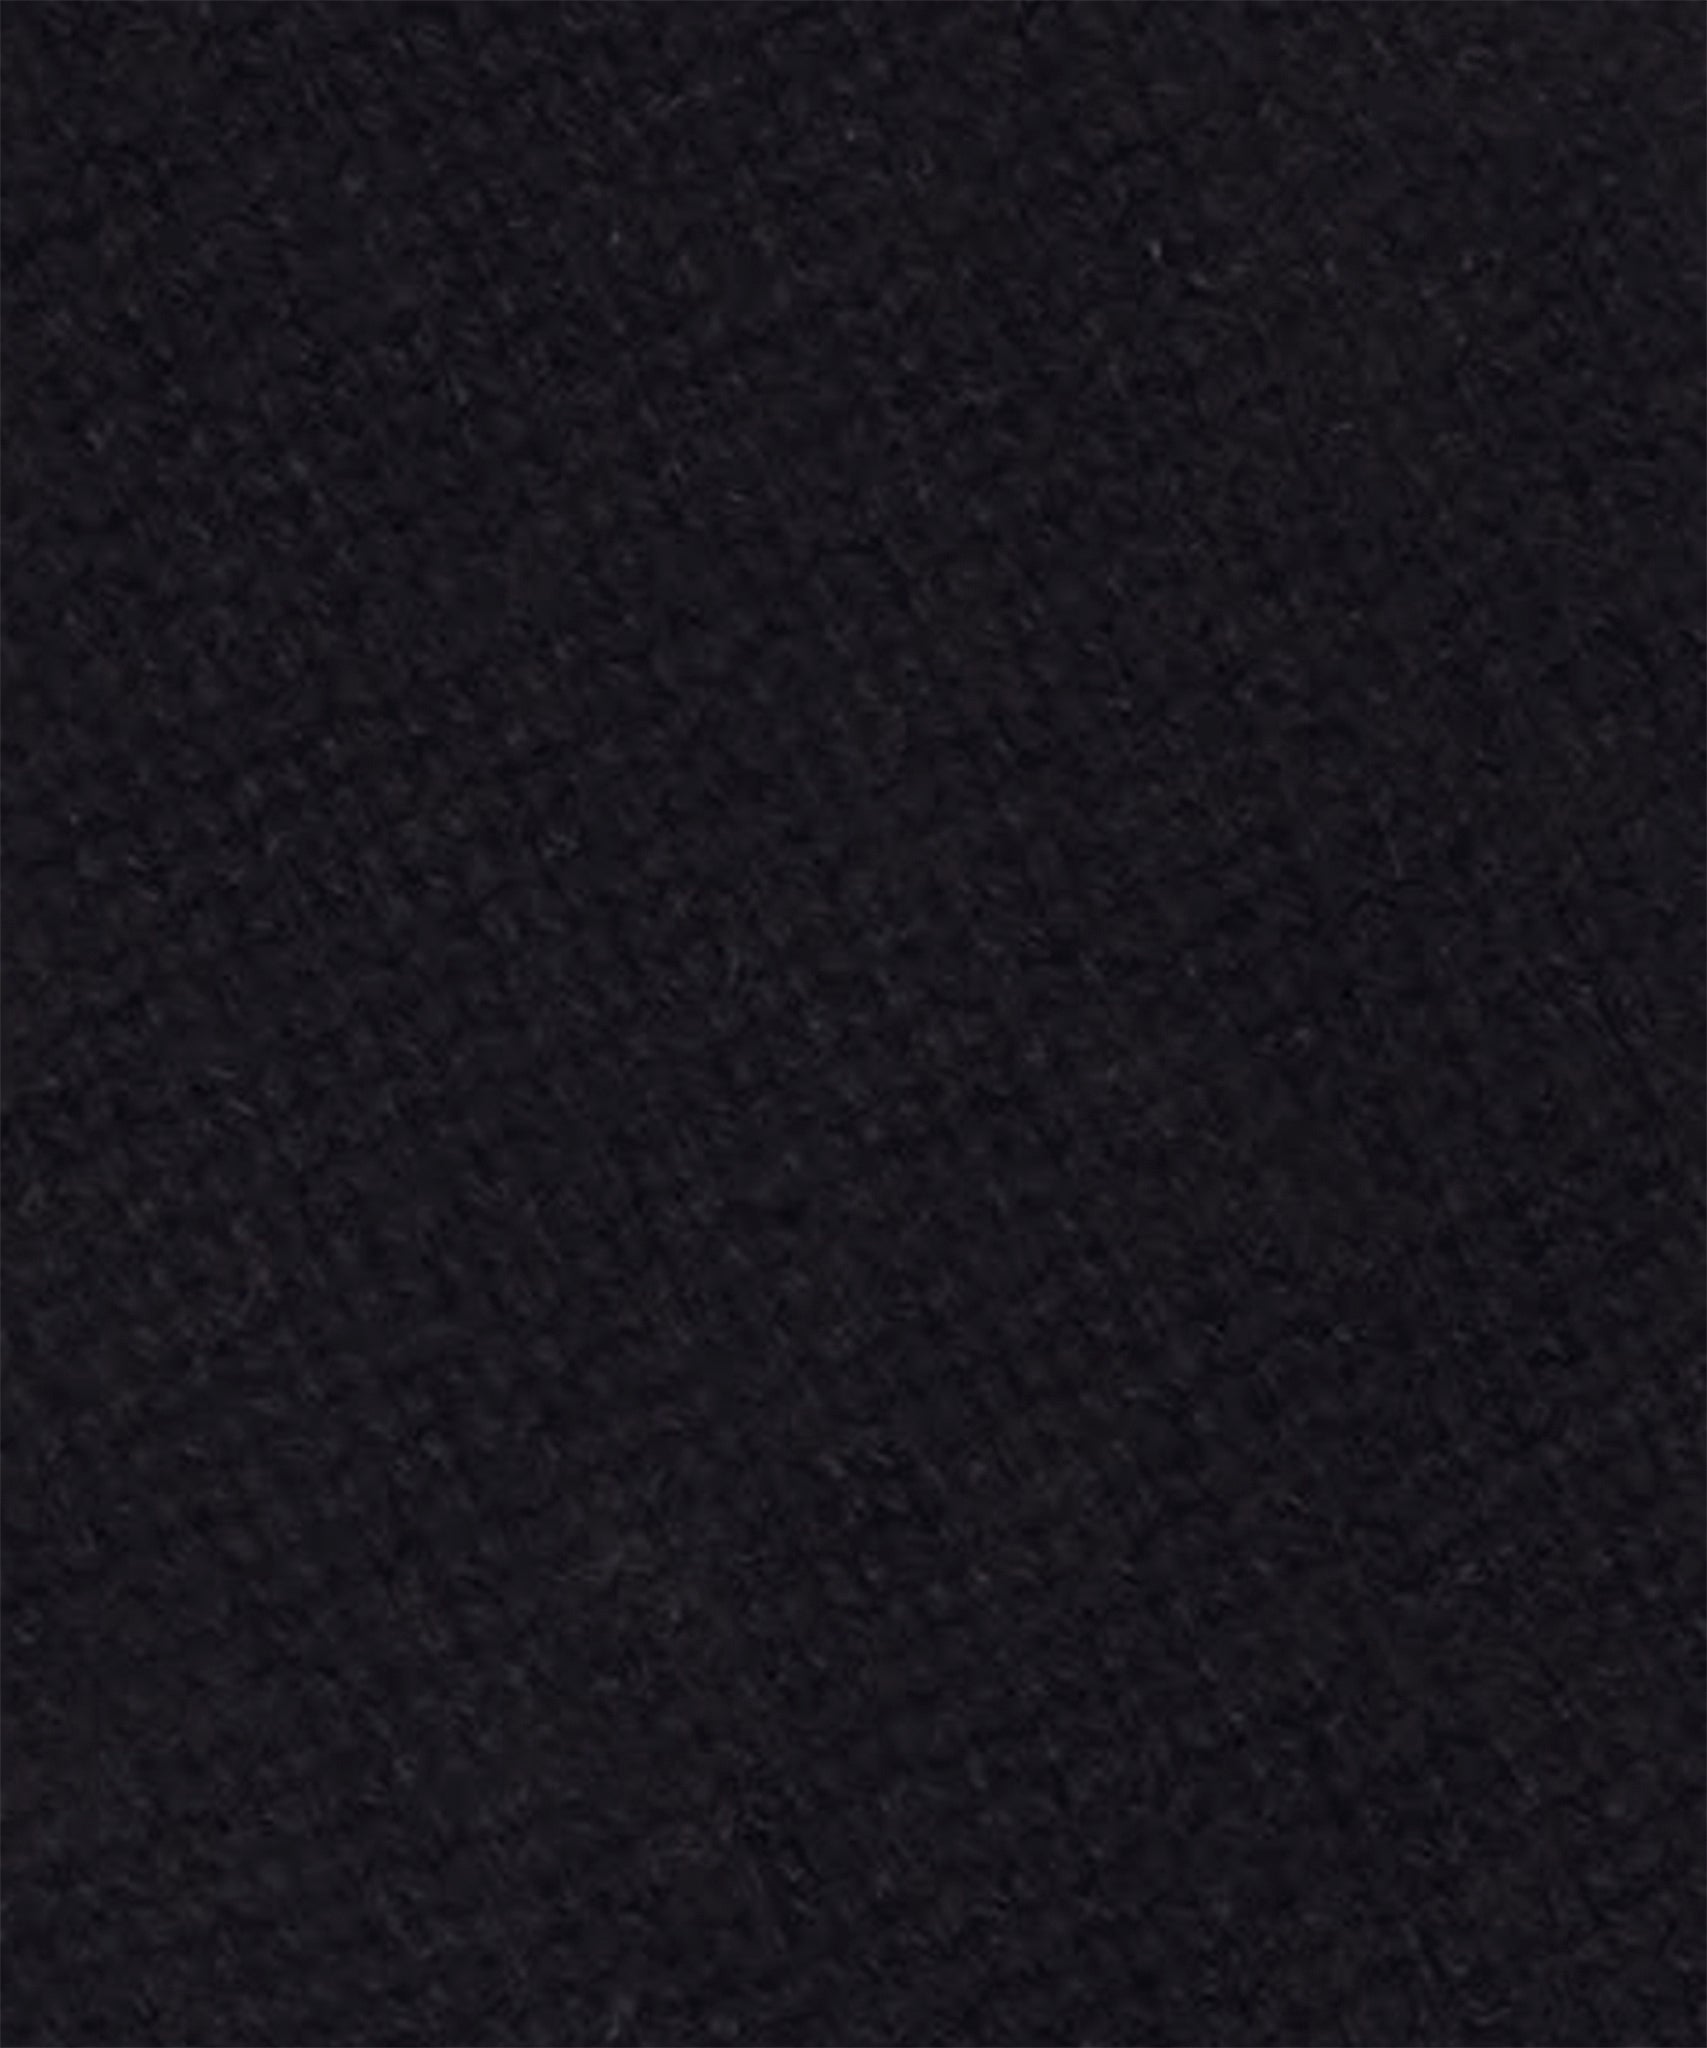 Wool/Cashmere  Gloves in color Black